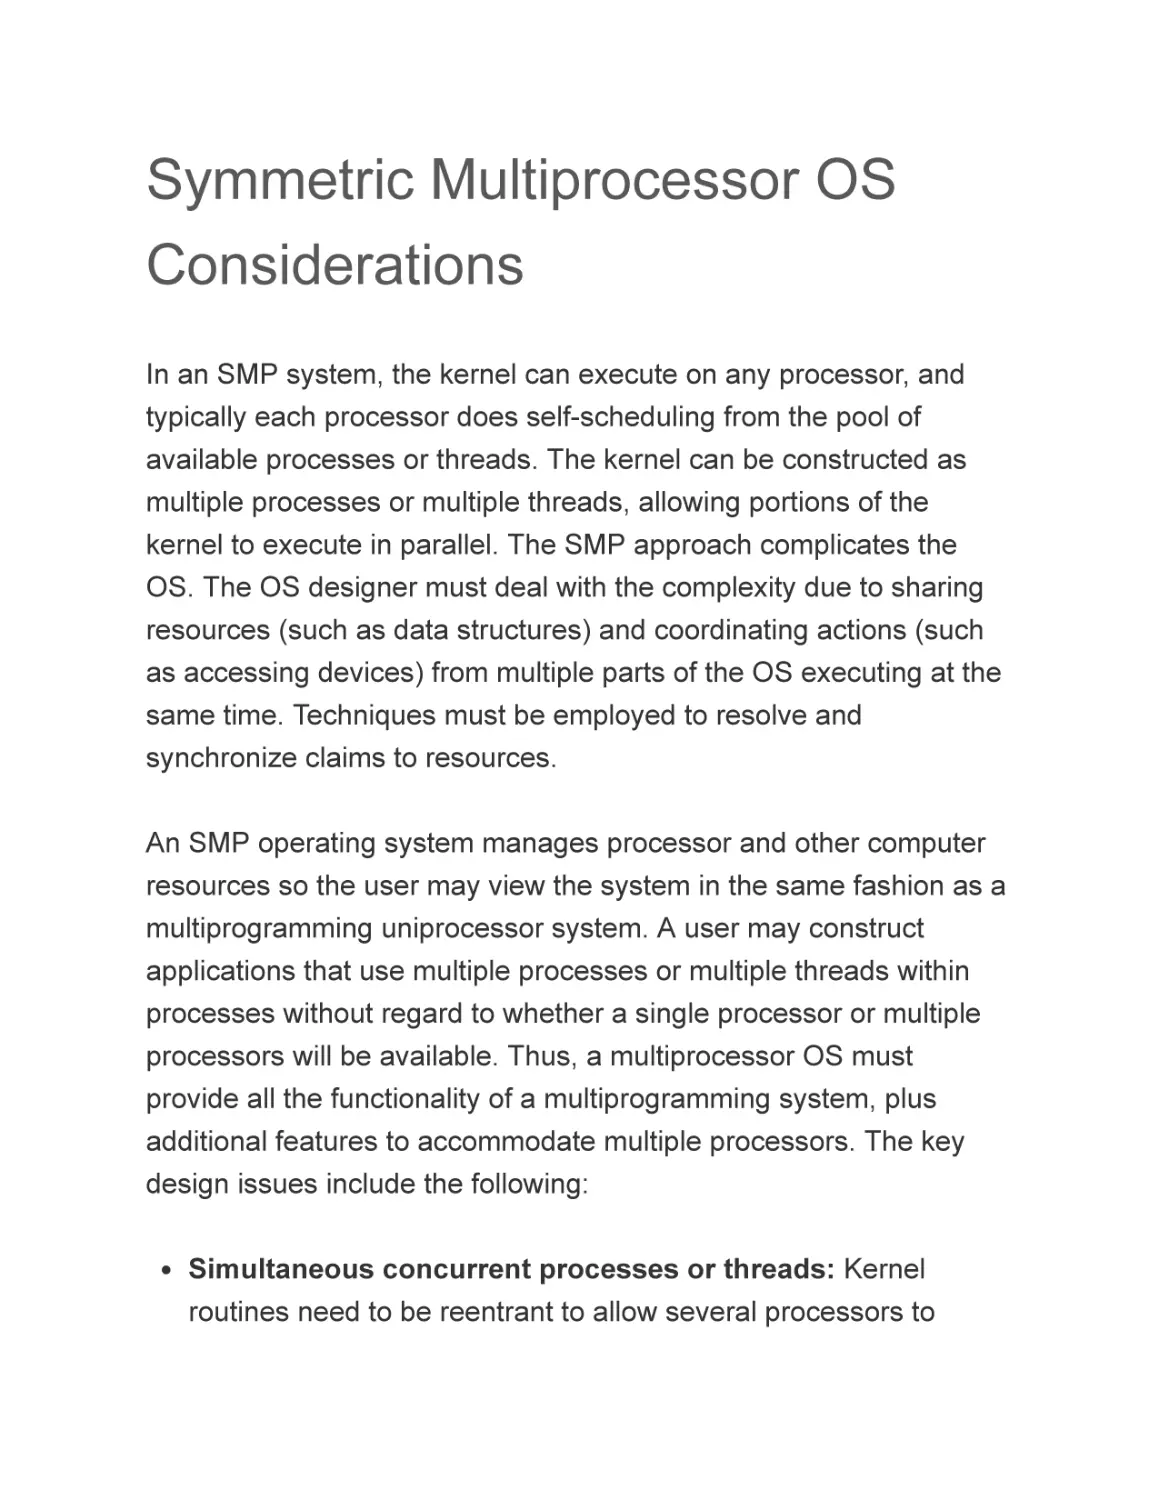 Symmetric Multiprocessor OS Considerations